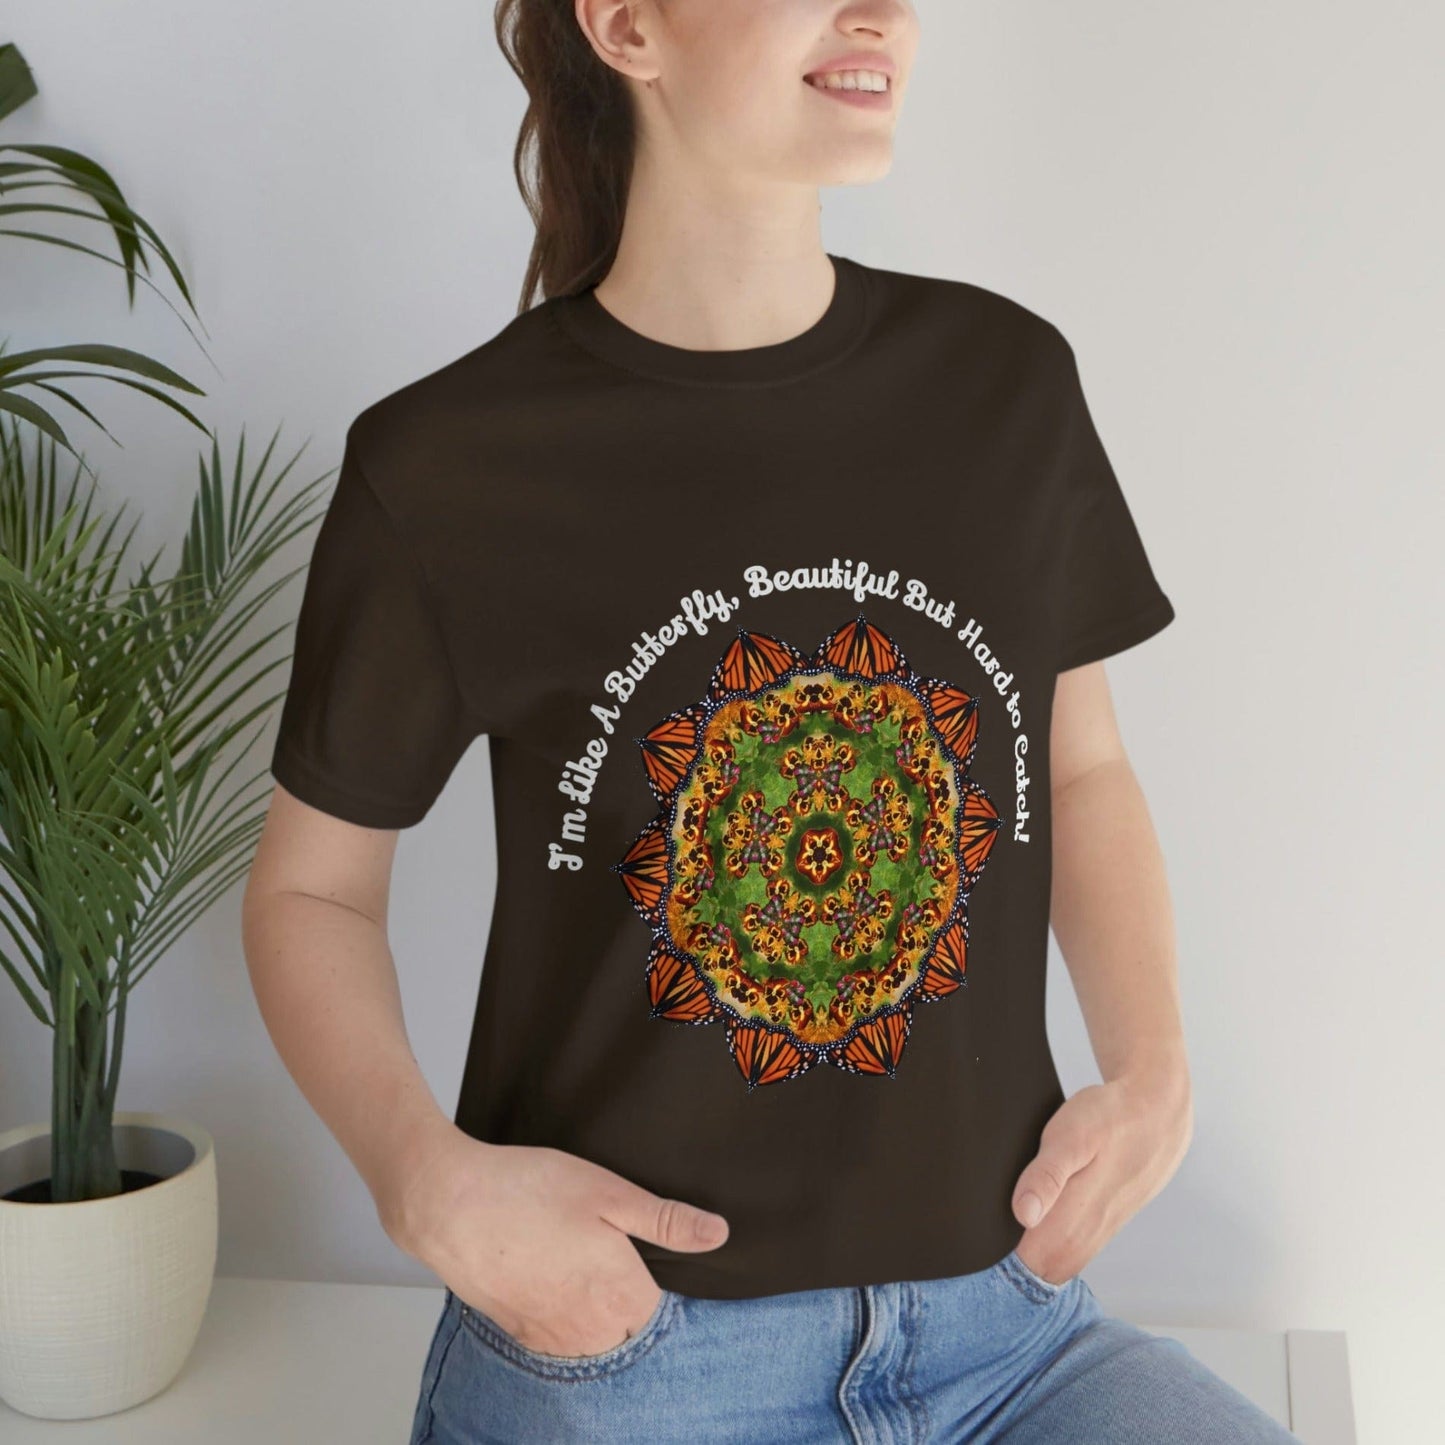 Butterfly Top, Zen Mystical Poet Shirt, Cottage Core Bug, Shirt, Best Selling Shirts, Insect Shirt, Cute Shirts Teens & Women Yoga Shirt 4